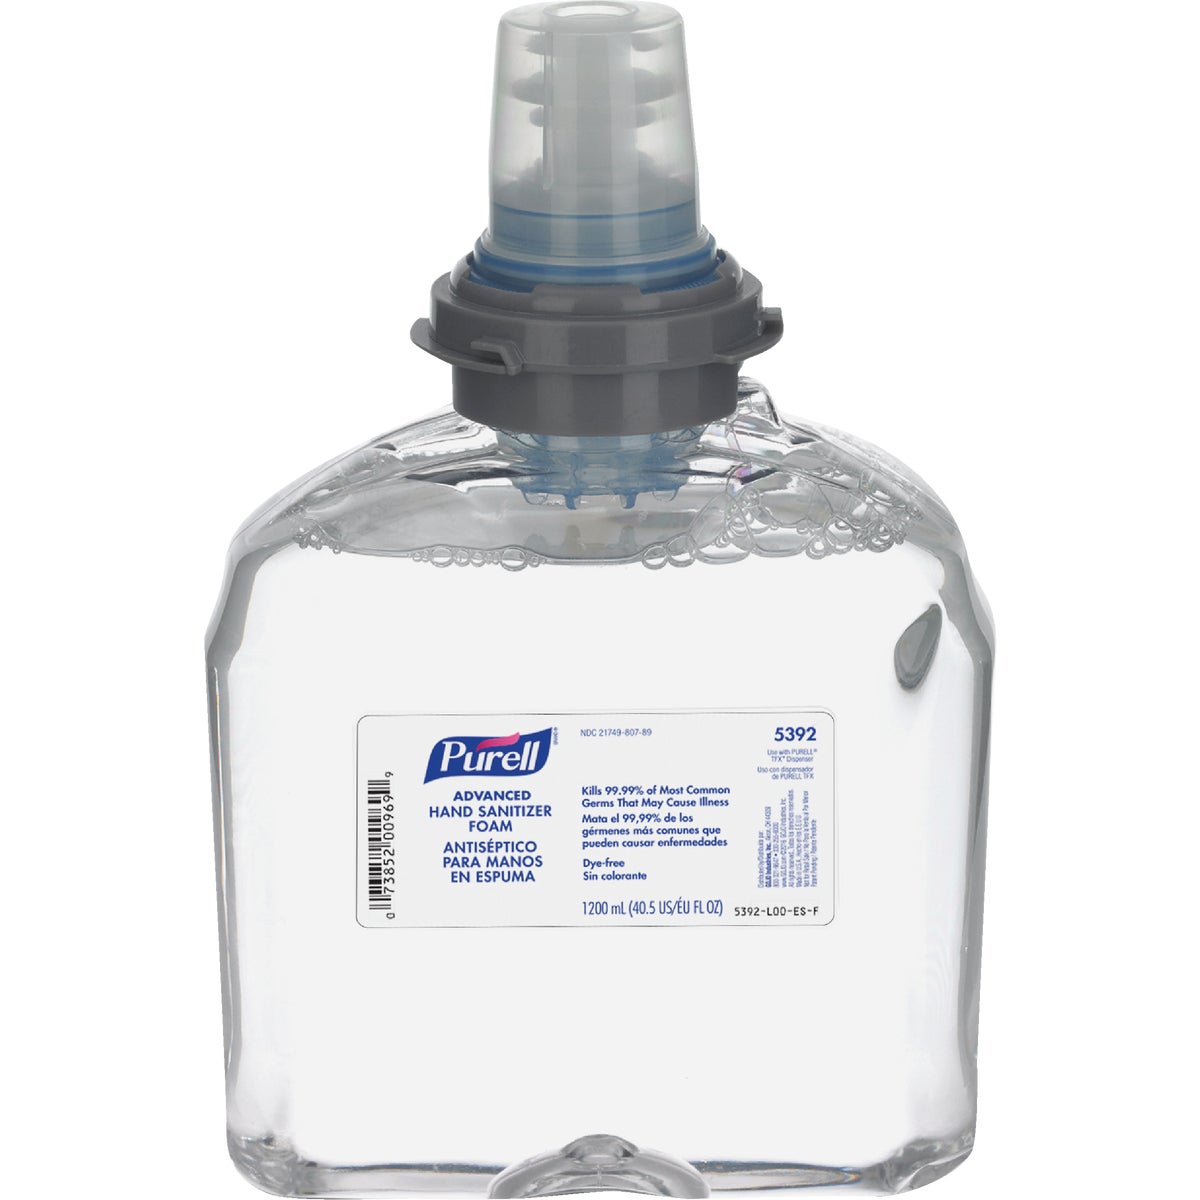 Item 634557, Purell Advanced Hand Sanitizer exceeds FDA Healthcare Personnel Handwash 